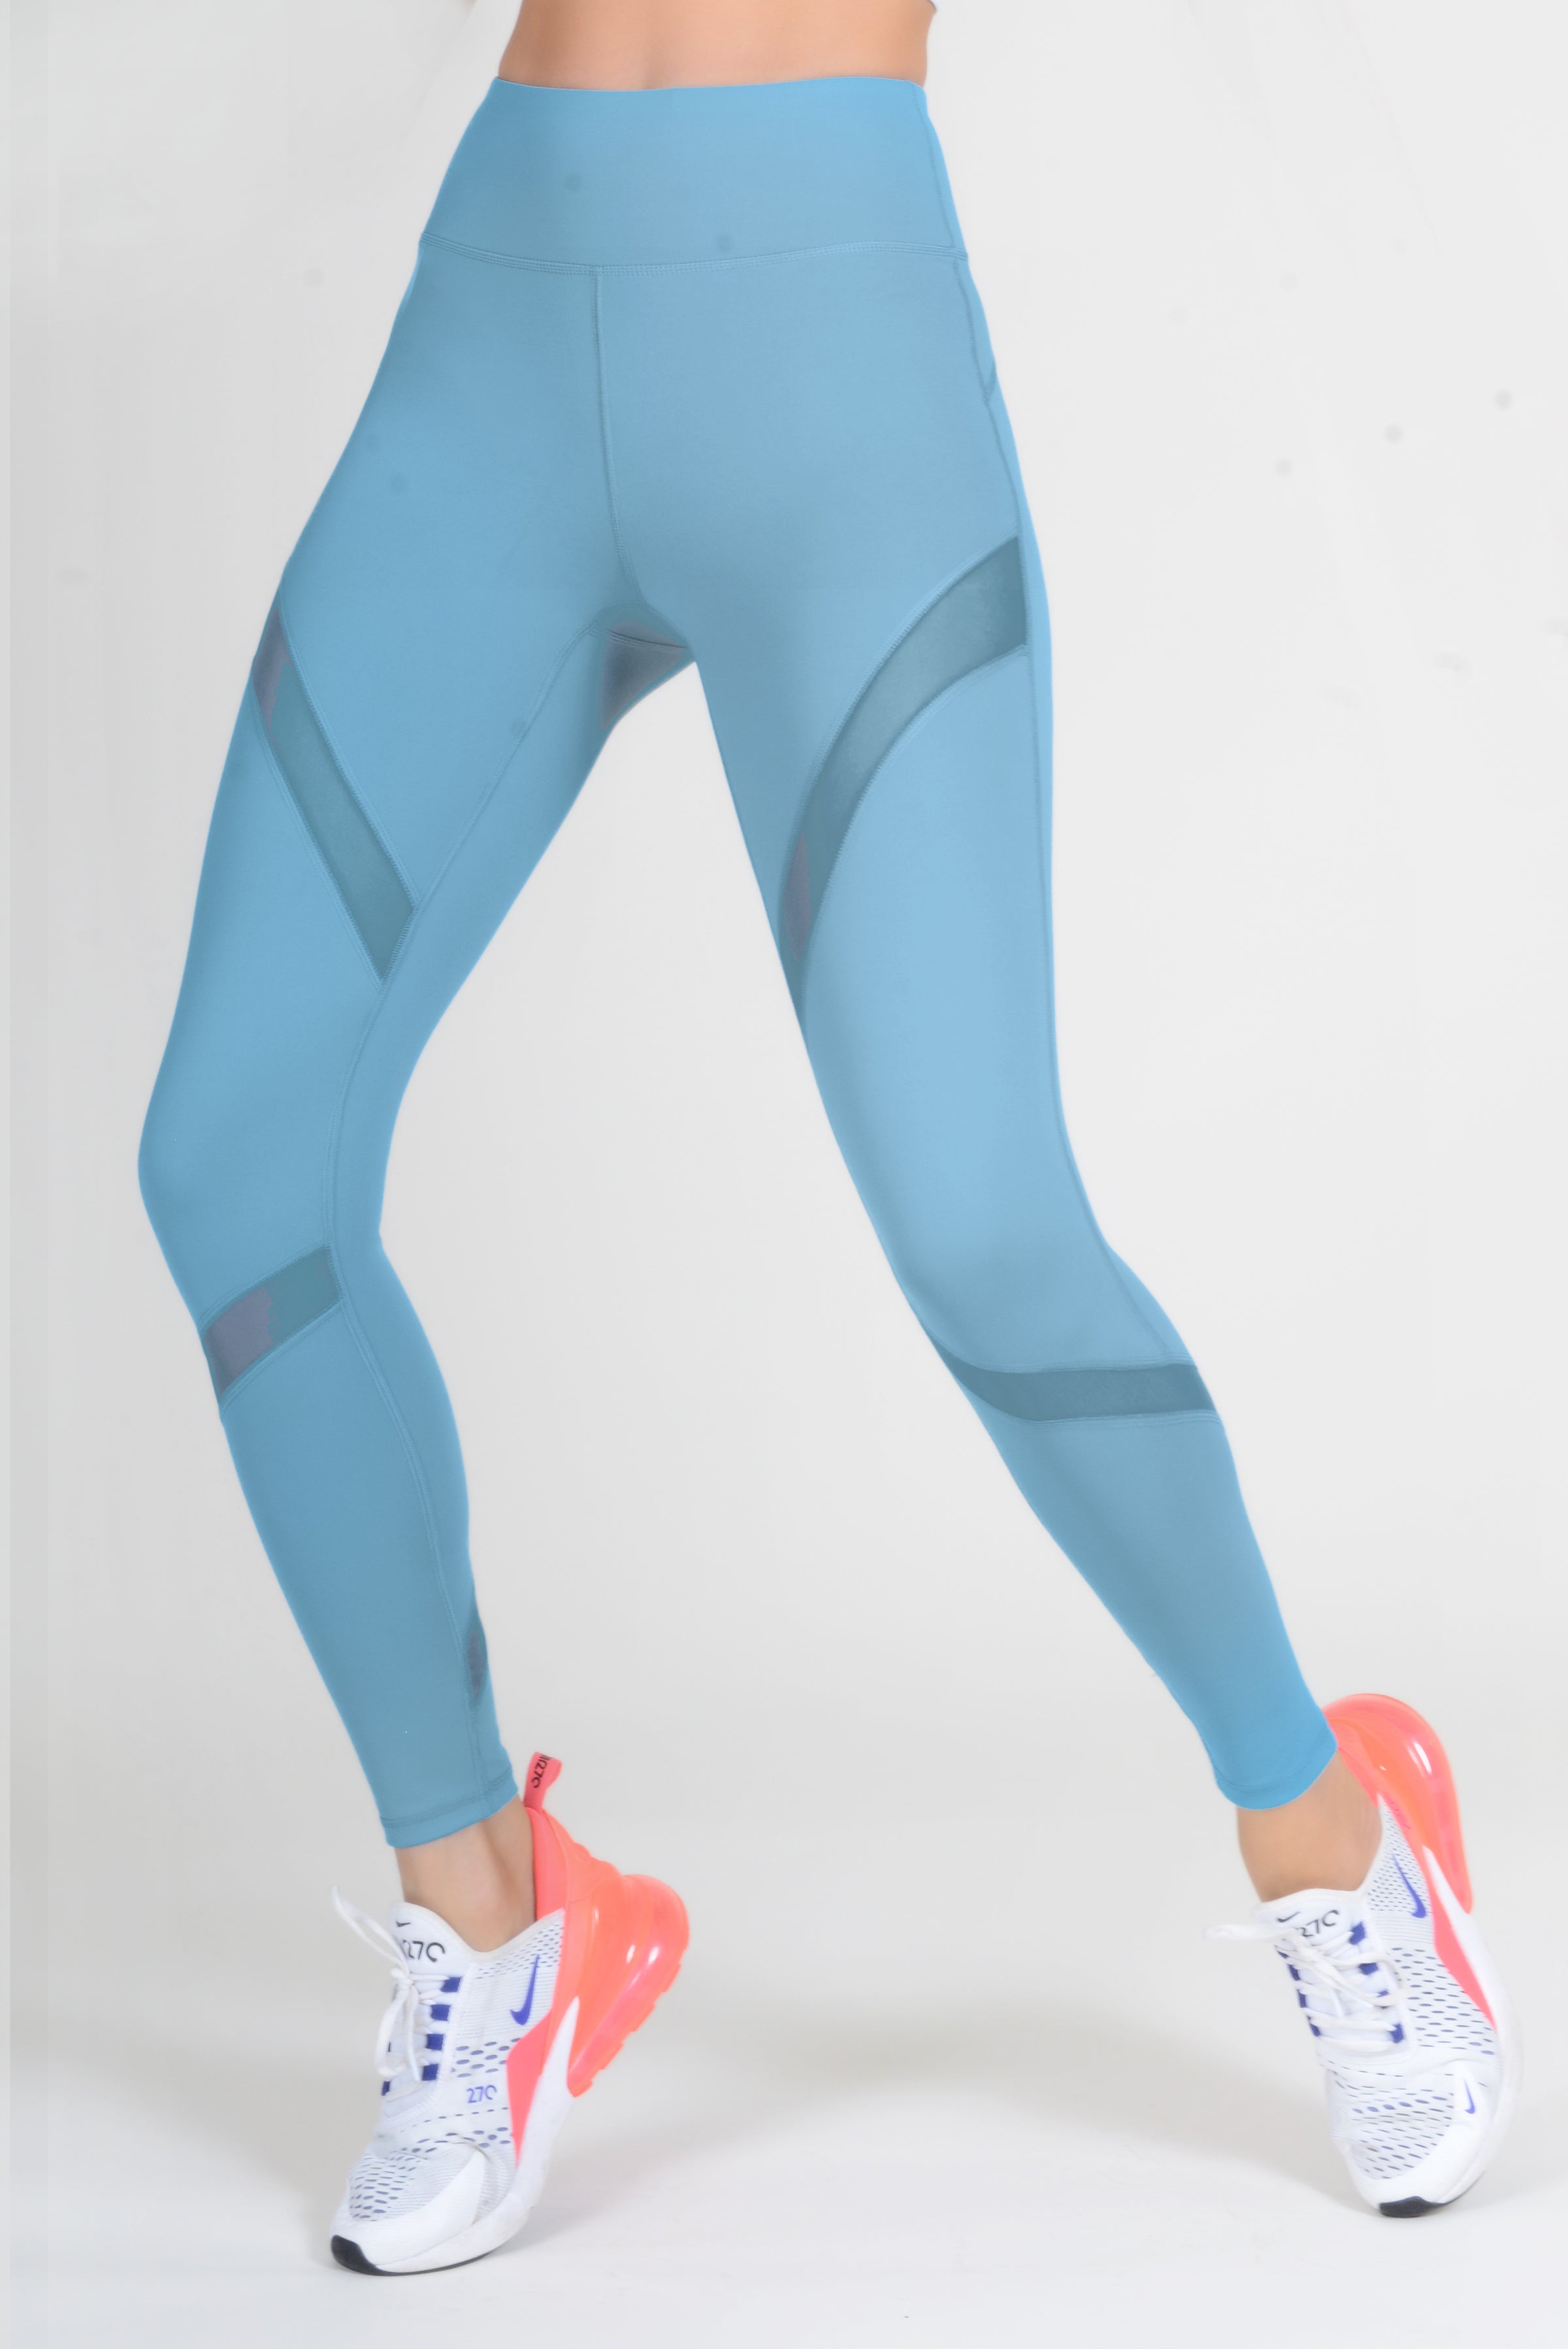 Forever 21 Active Mesh-Panel Capri Leggings  Womens workout outfits,  Ladies dress design, Workout attire